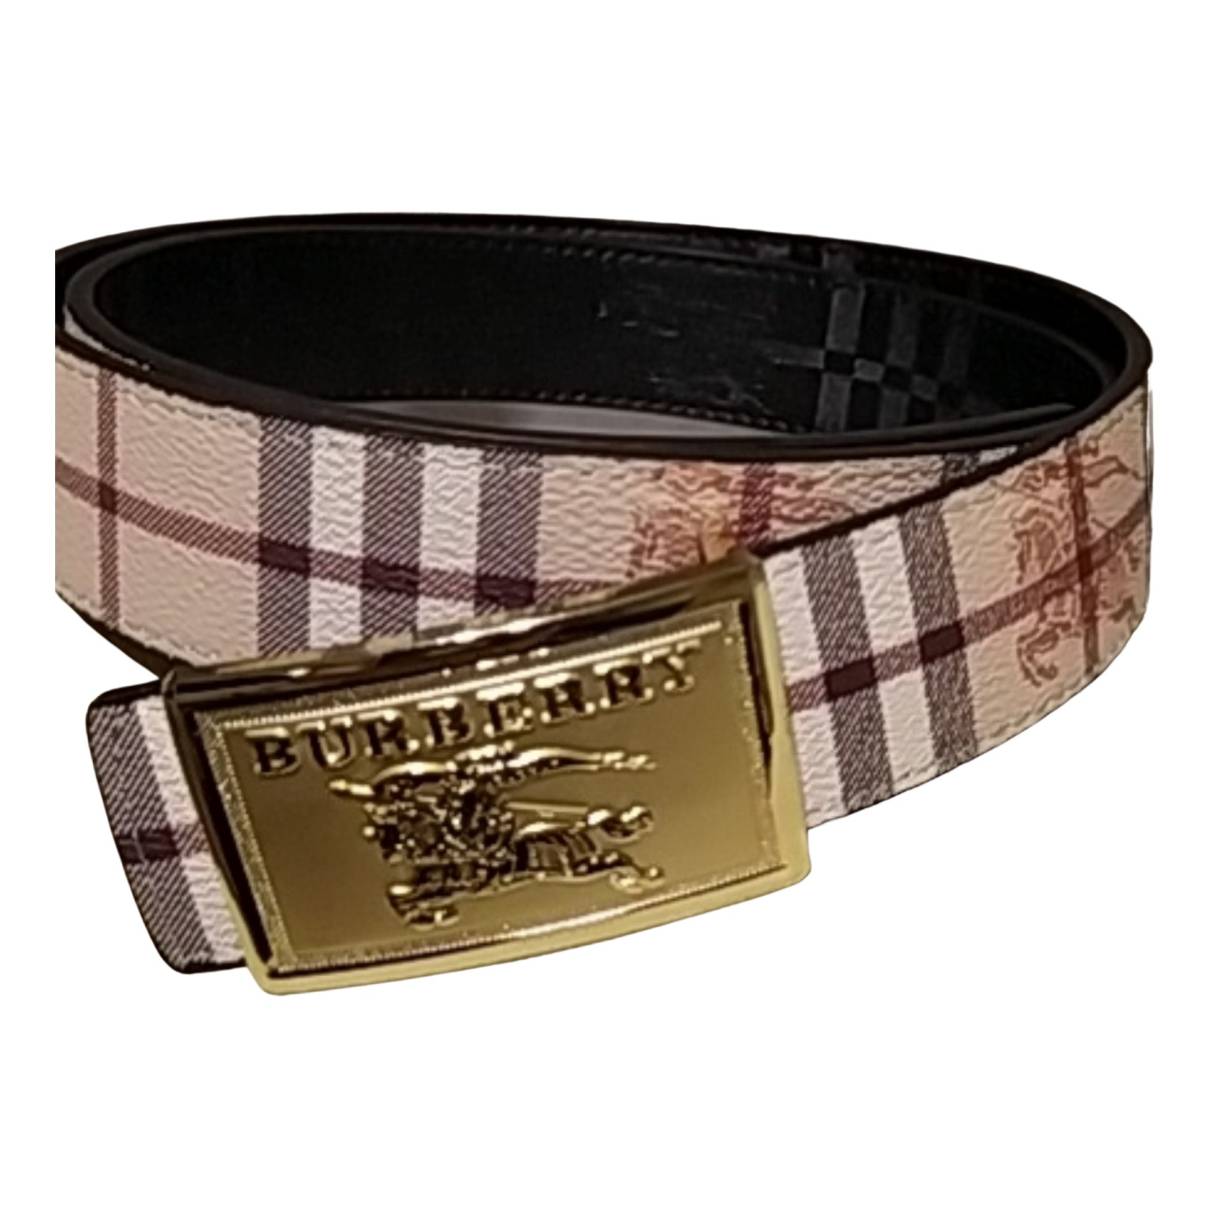 real burberry belt buckle